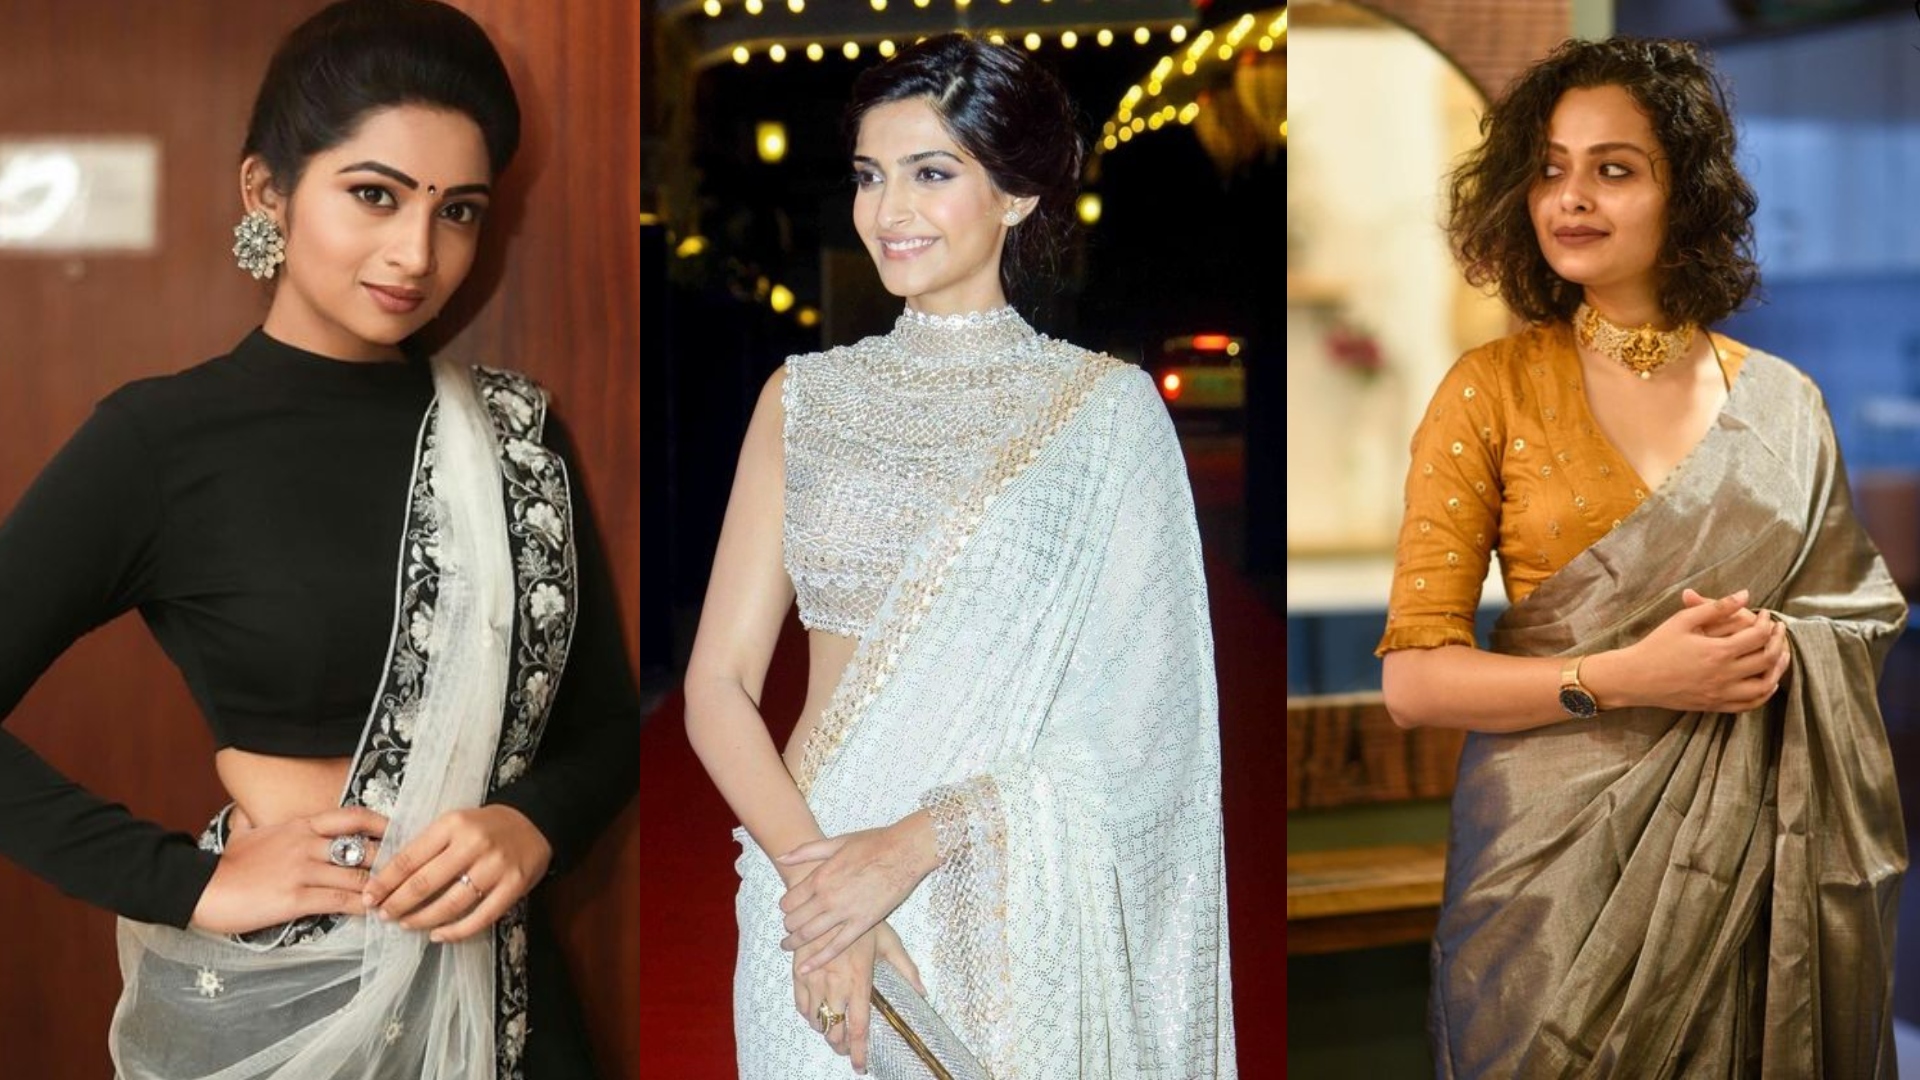 Style Silk Saree with Crop Tops | 5 looks to wear silk saree stylishly |  Jainee Gandhi - YouTube